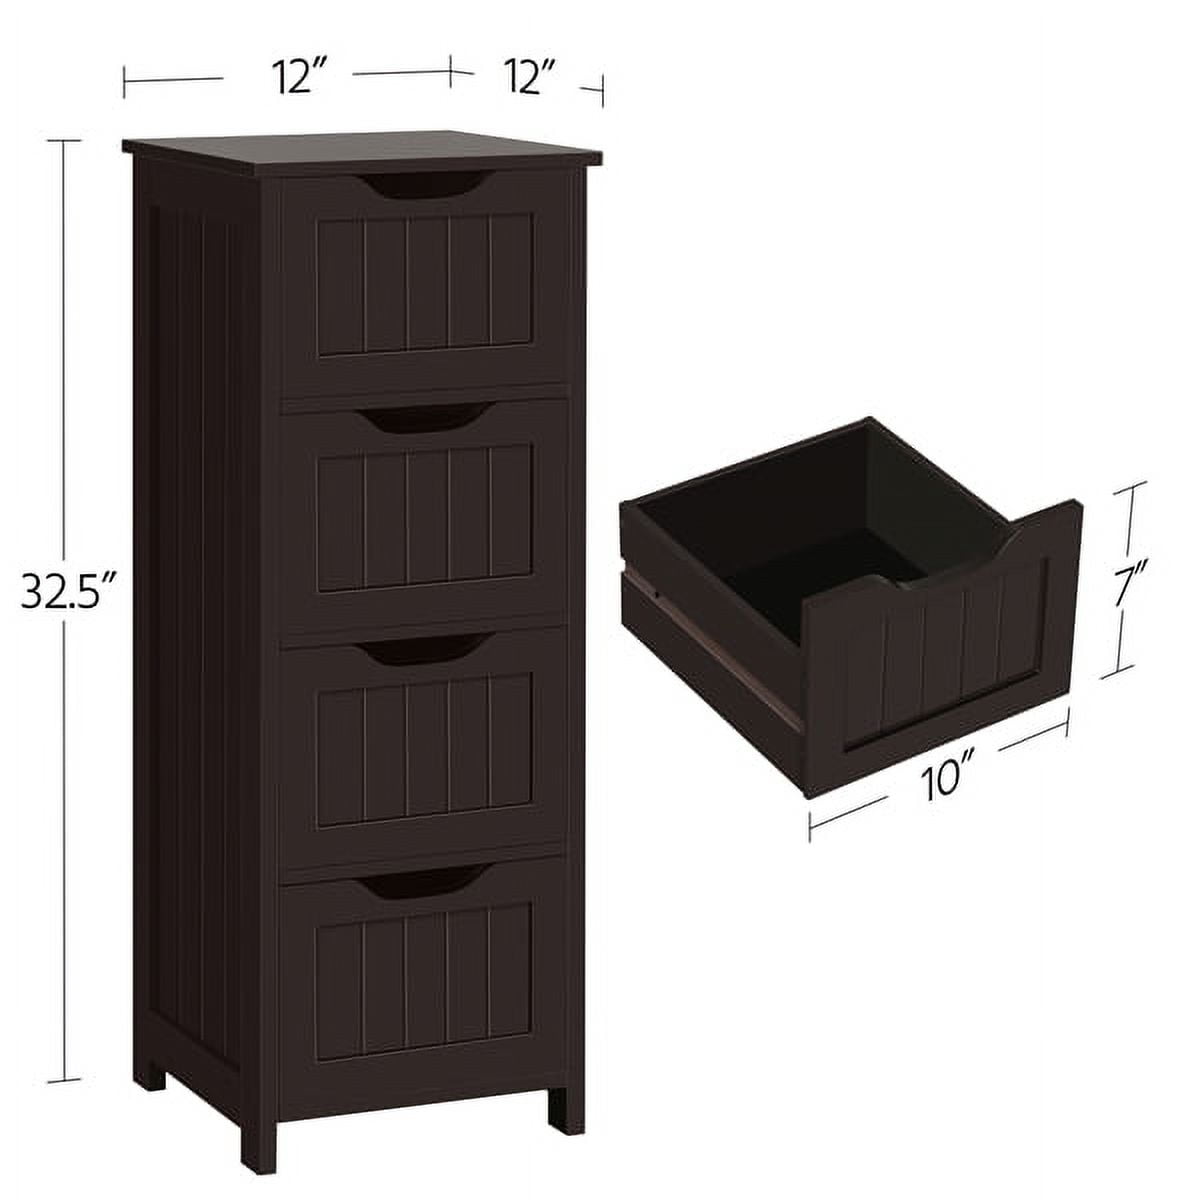 Easyfashion Wooden Storage Cabinet Organizer with 4 Drawers for Bathroom, Espresso, Brown